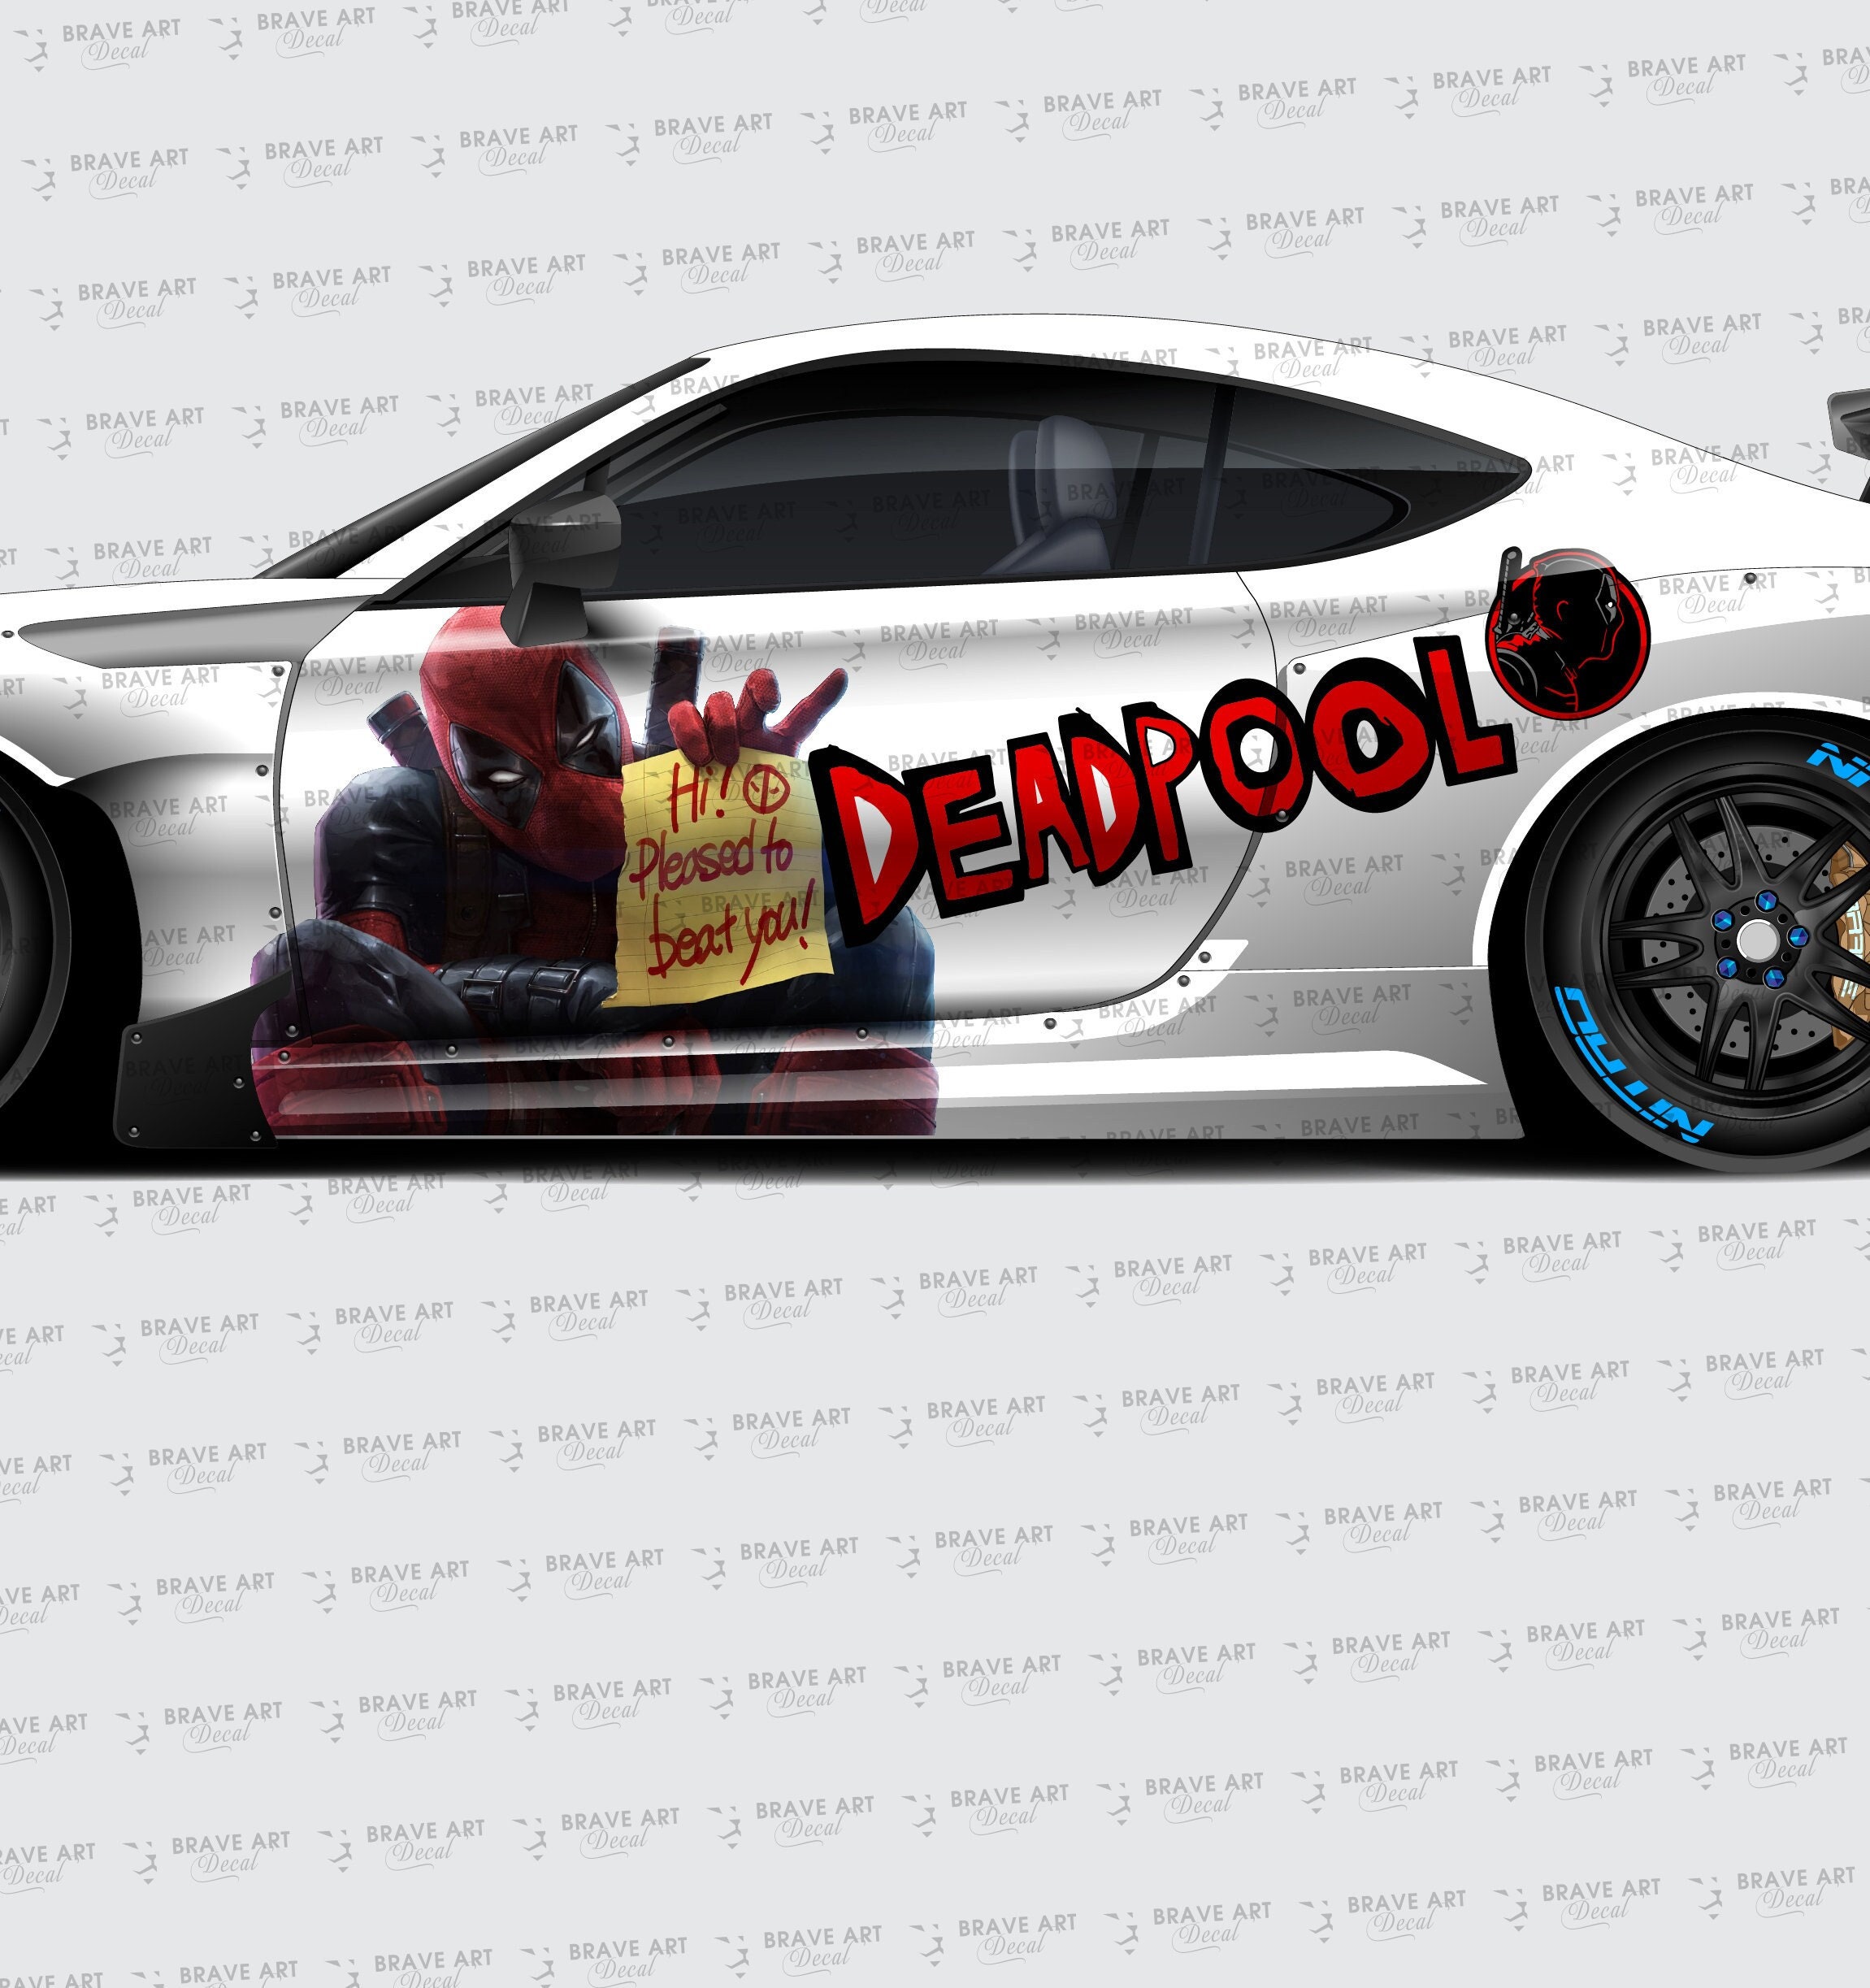 Deadpool car wrap - .de